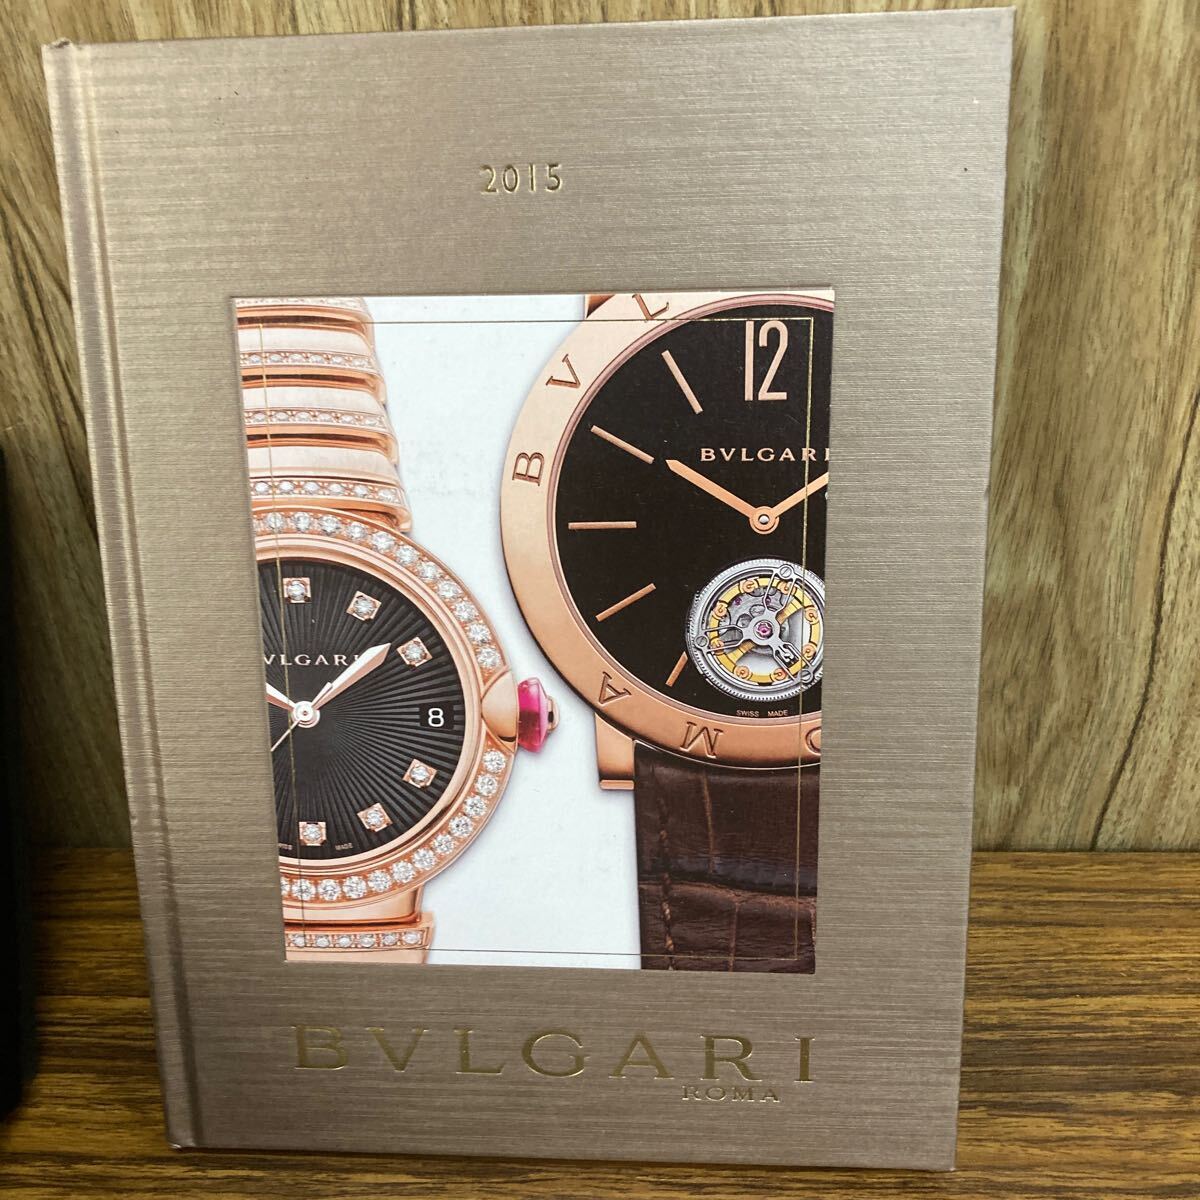  BVLGARY BVLGARI кейс для часов пустой коробка наручные часы box BOX пустой коробка каталог бренд 